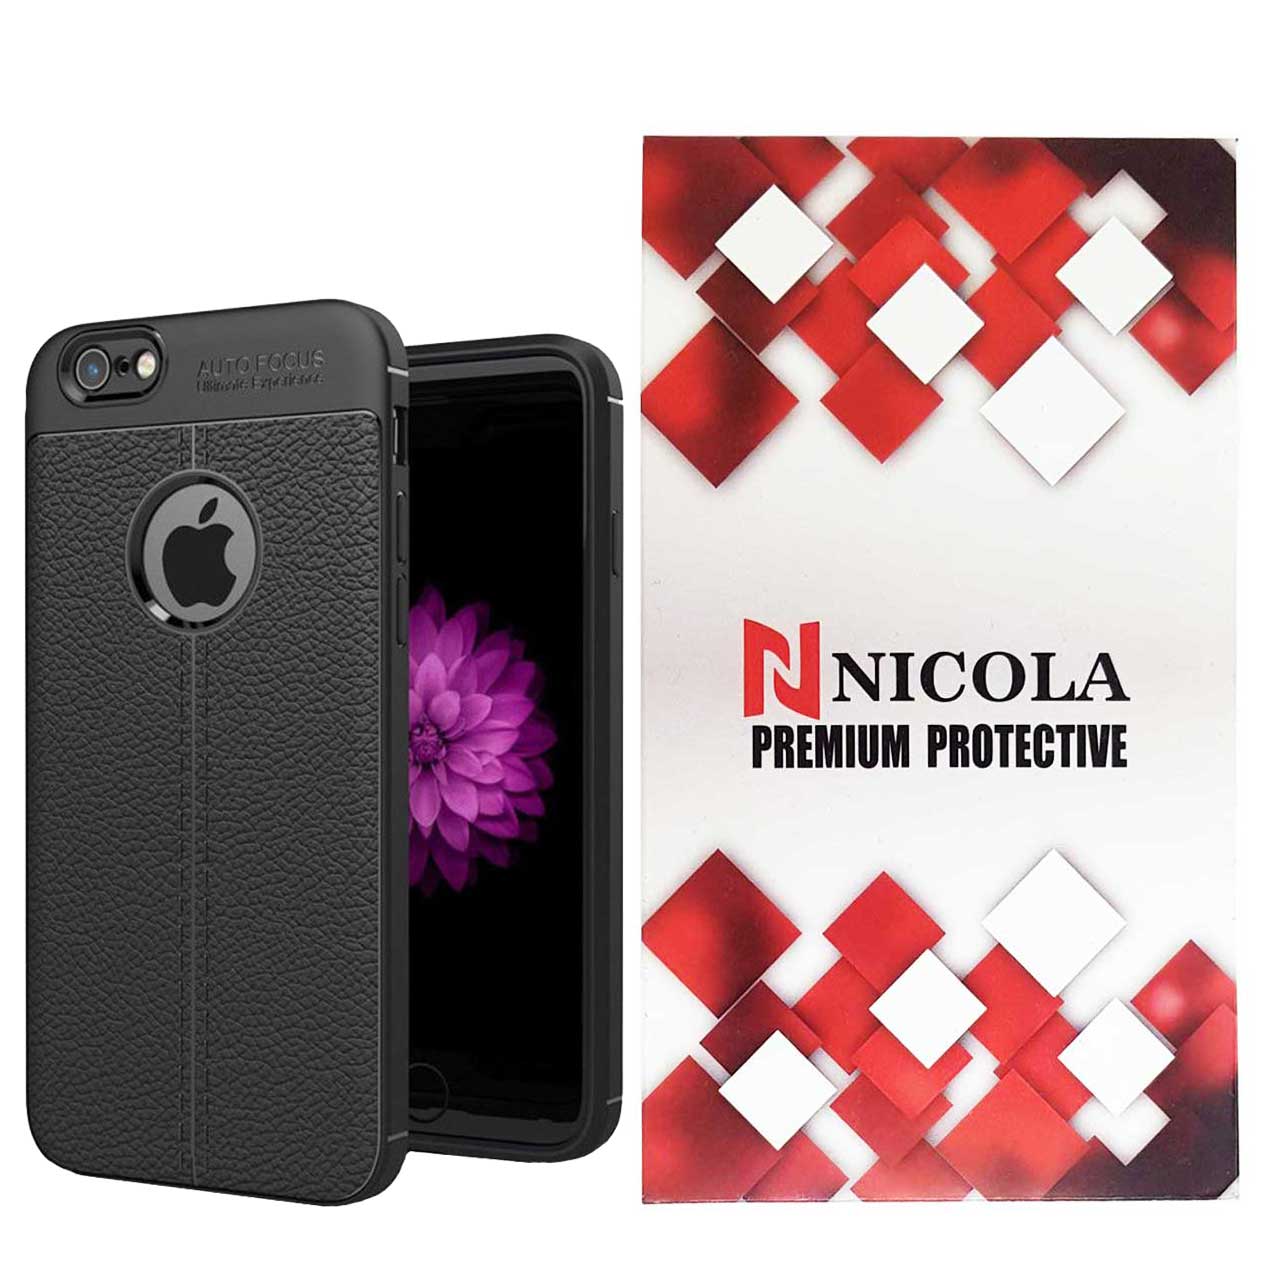 کاور نیکلا مدل N_ATO مناسب برای گوشی موبایل اپل Iphone 6/6s